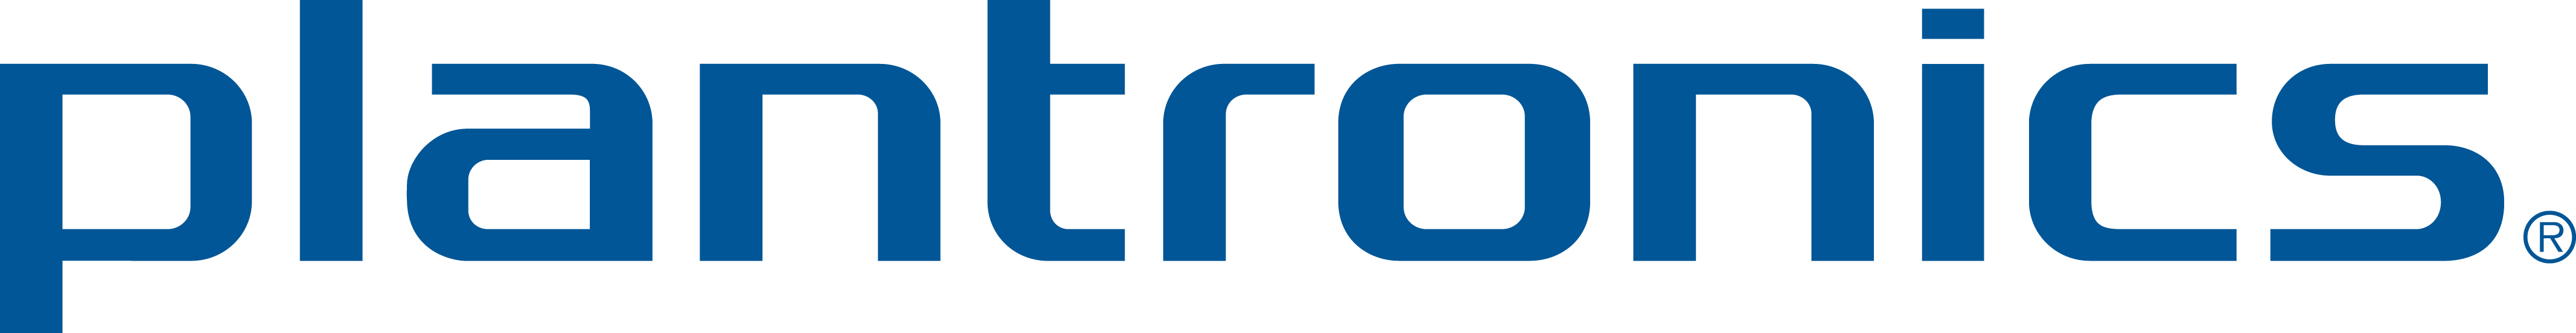 Plantronics Brand Logo